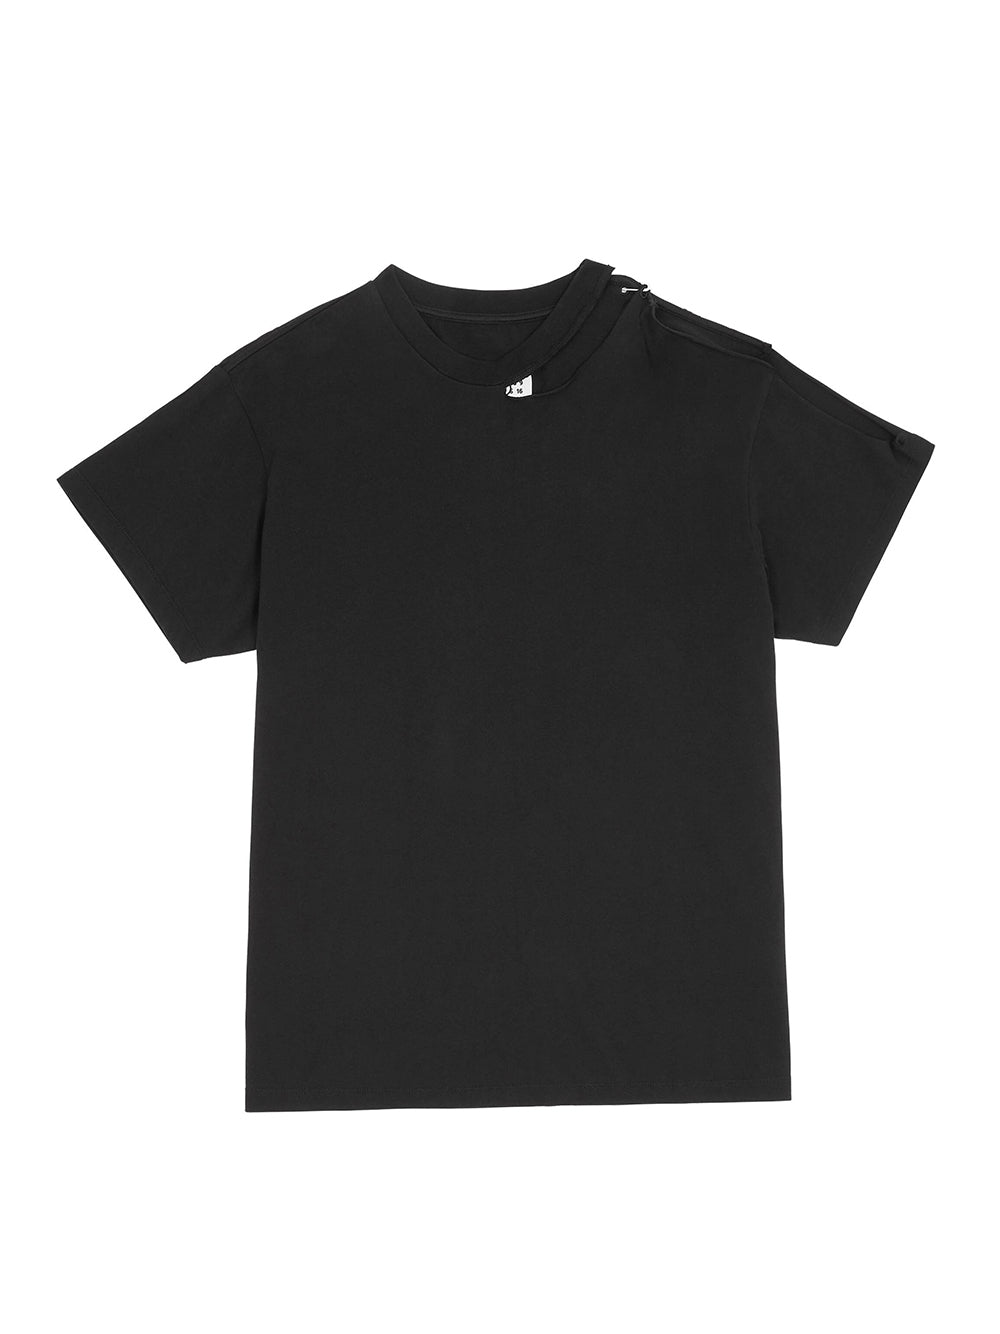 Safety-Pin T-shirt (Black)